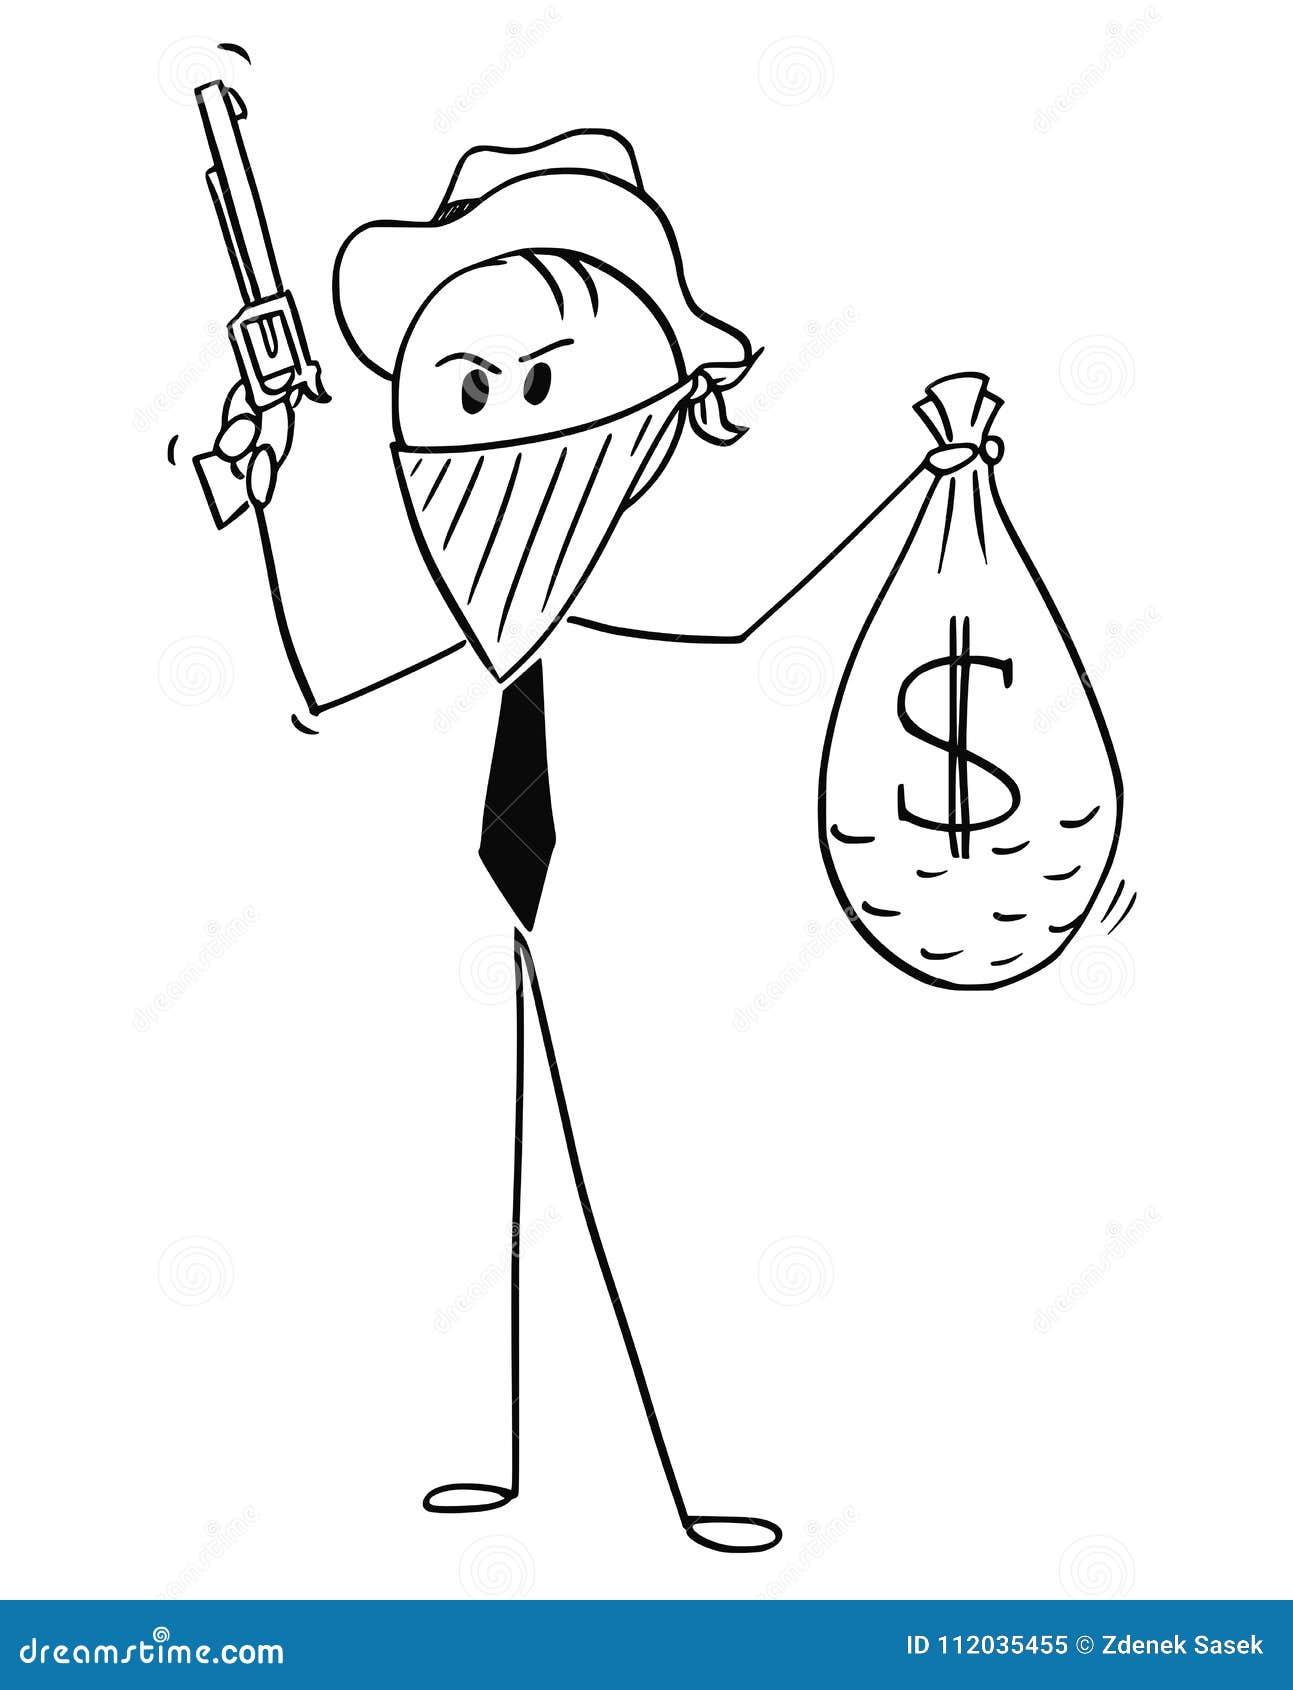 cartoon of masked businessman cowboy robber with bag of stolen dollar money and gun